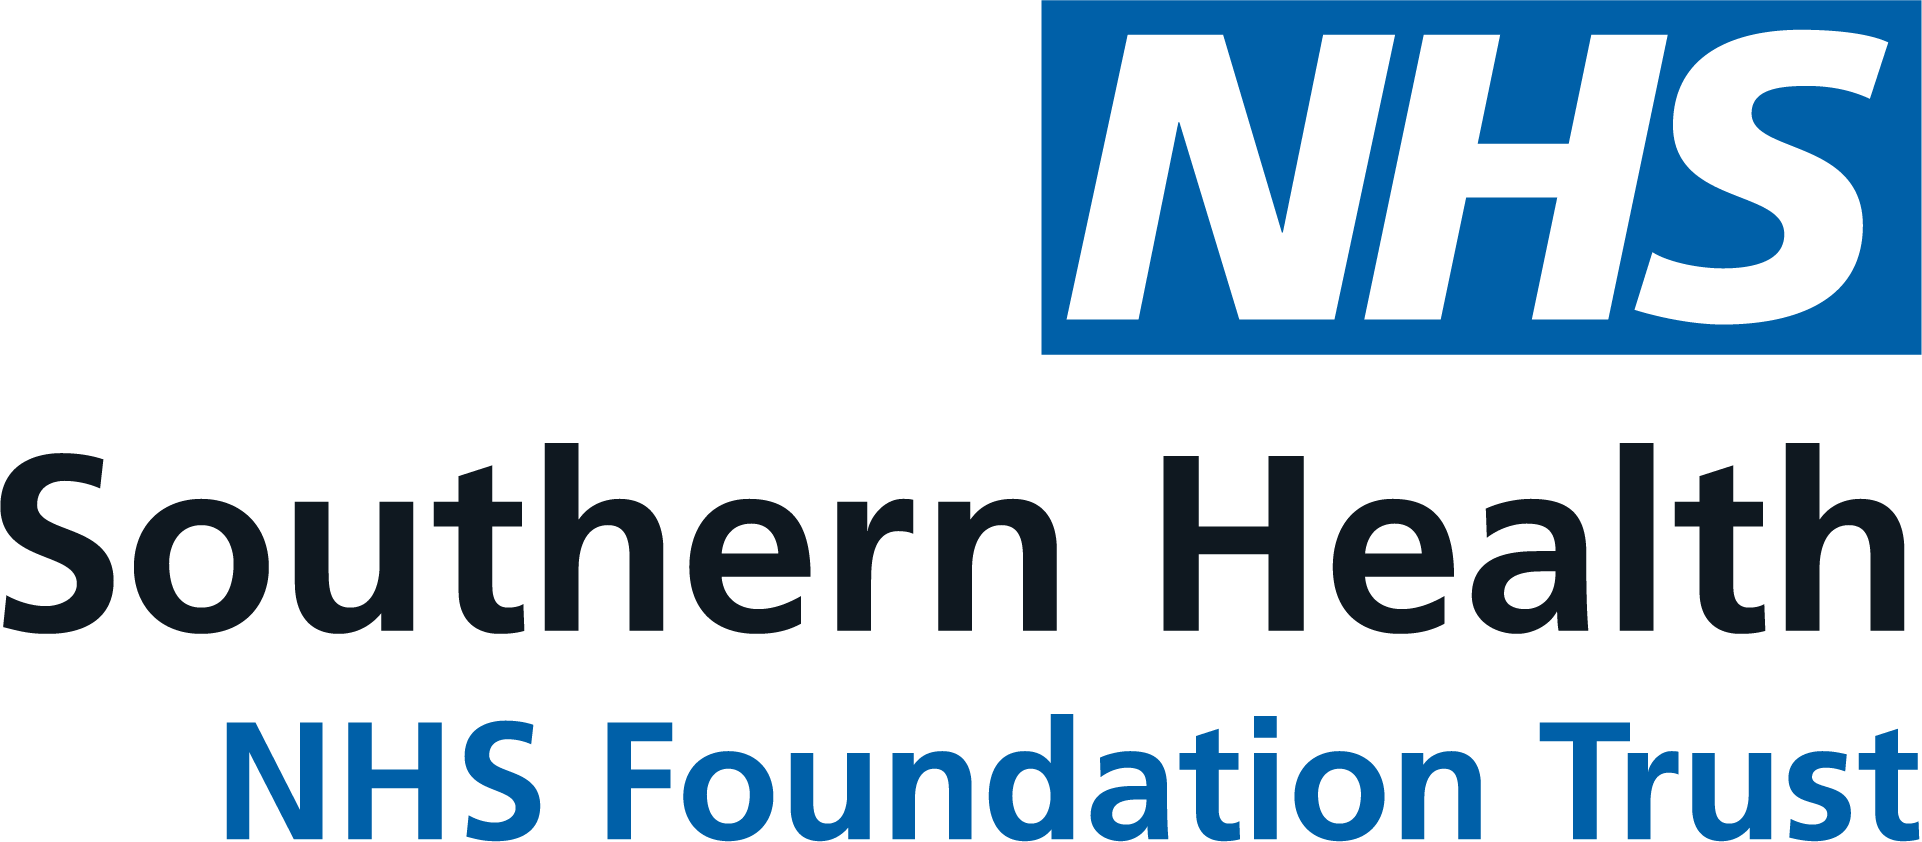 Southern Health NHS Foundation Trust logo